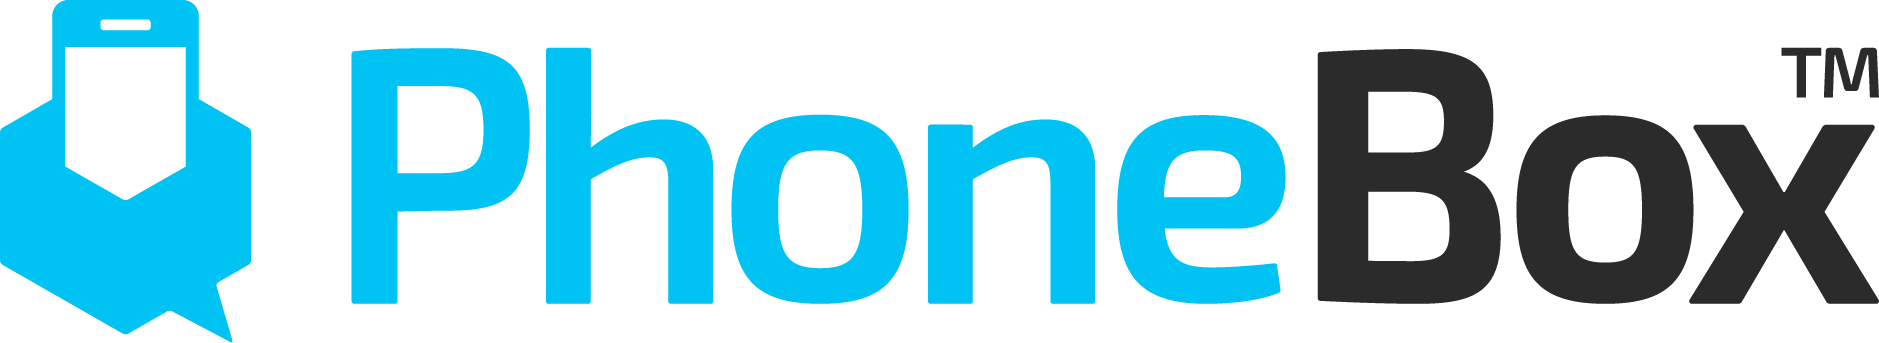 PhoneBox logo